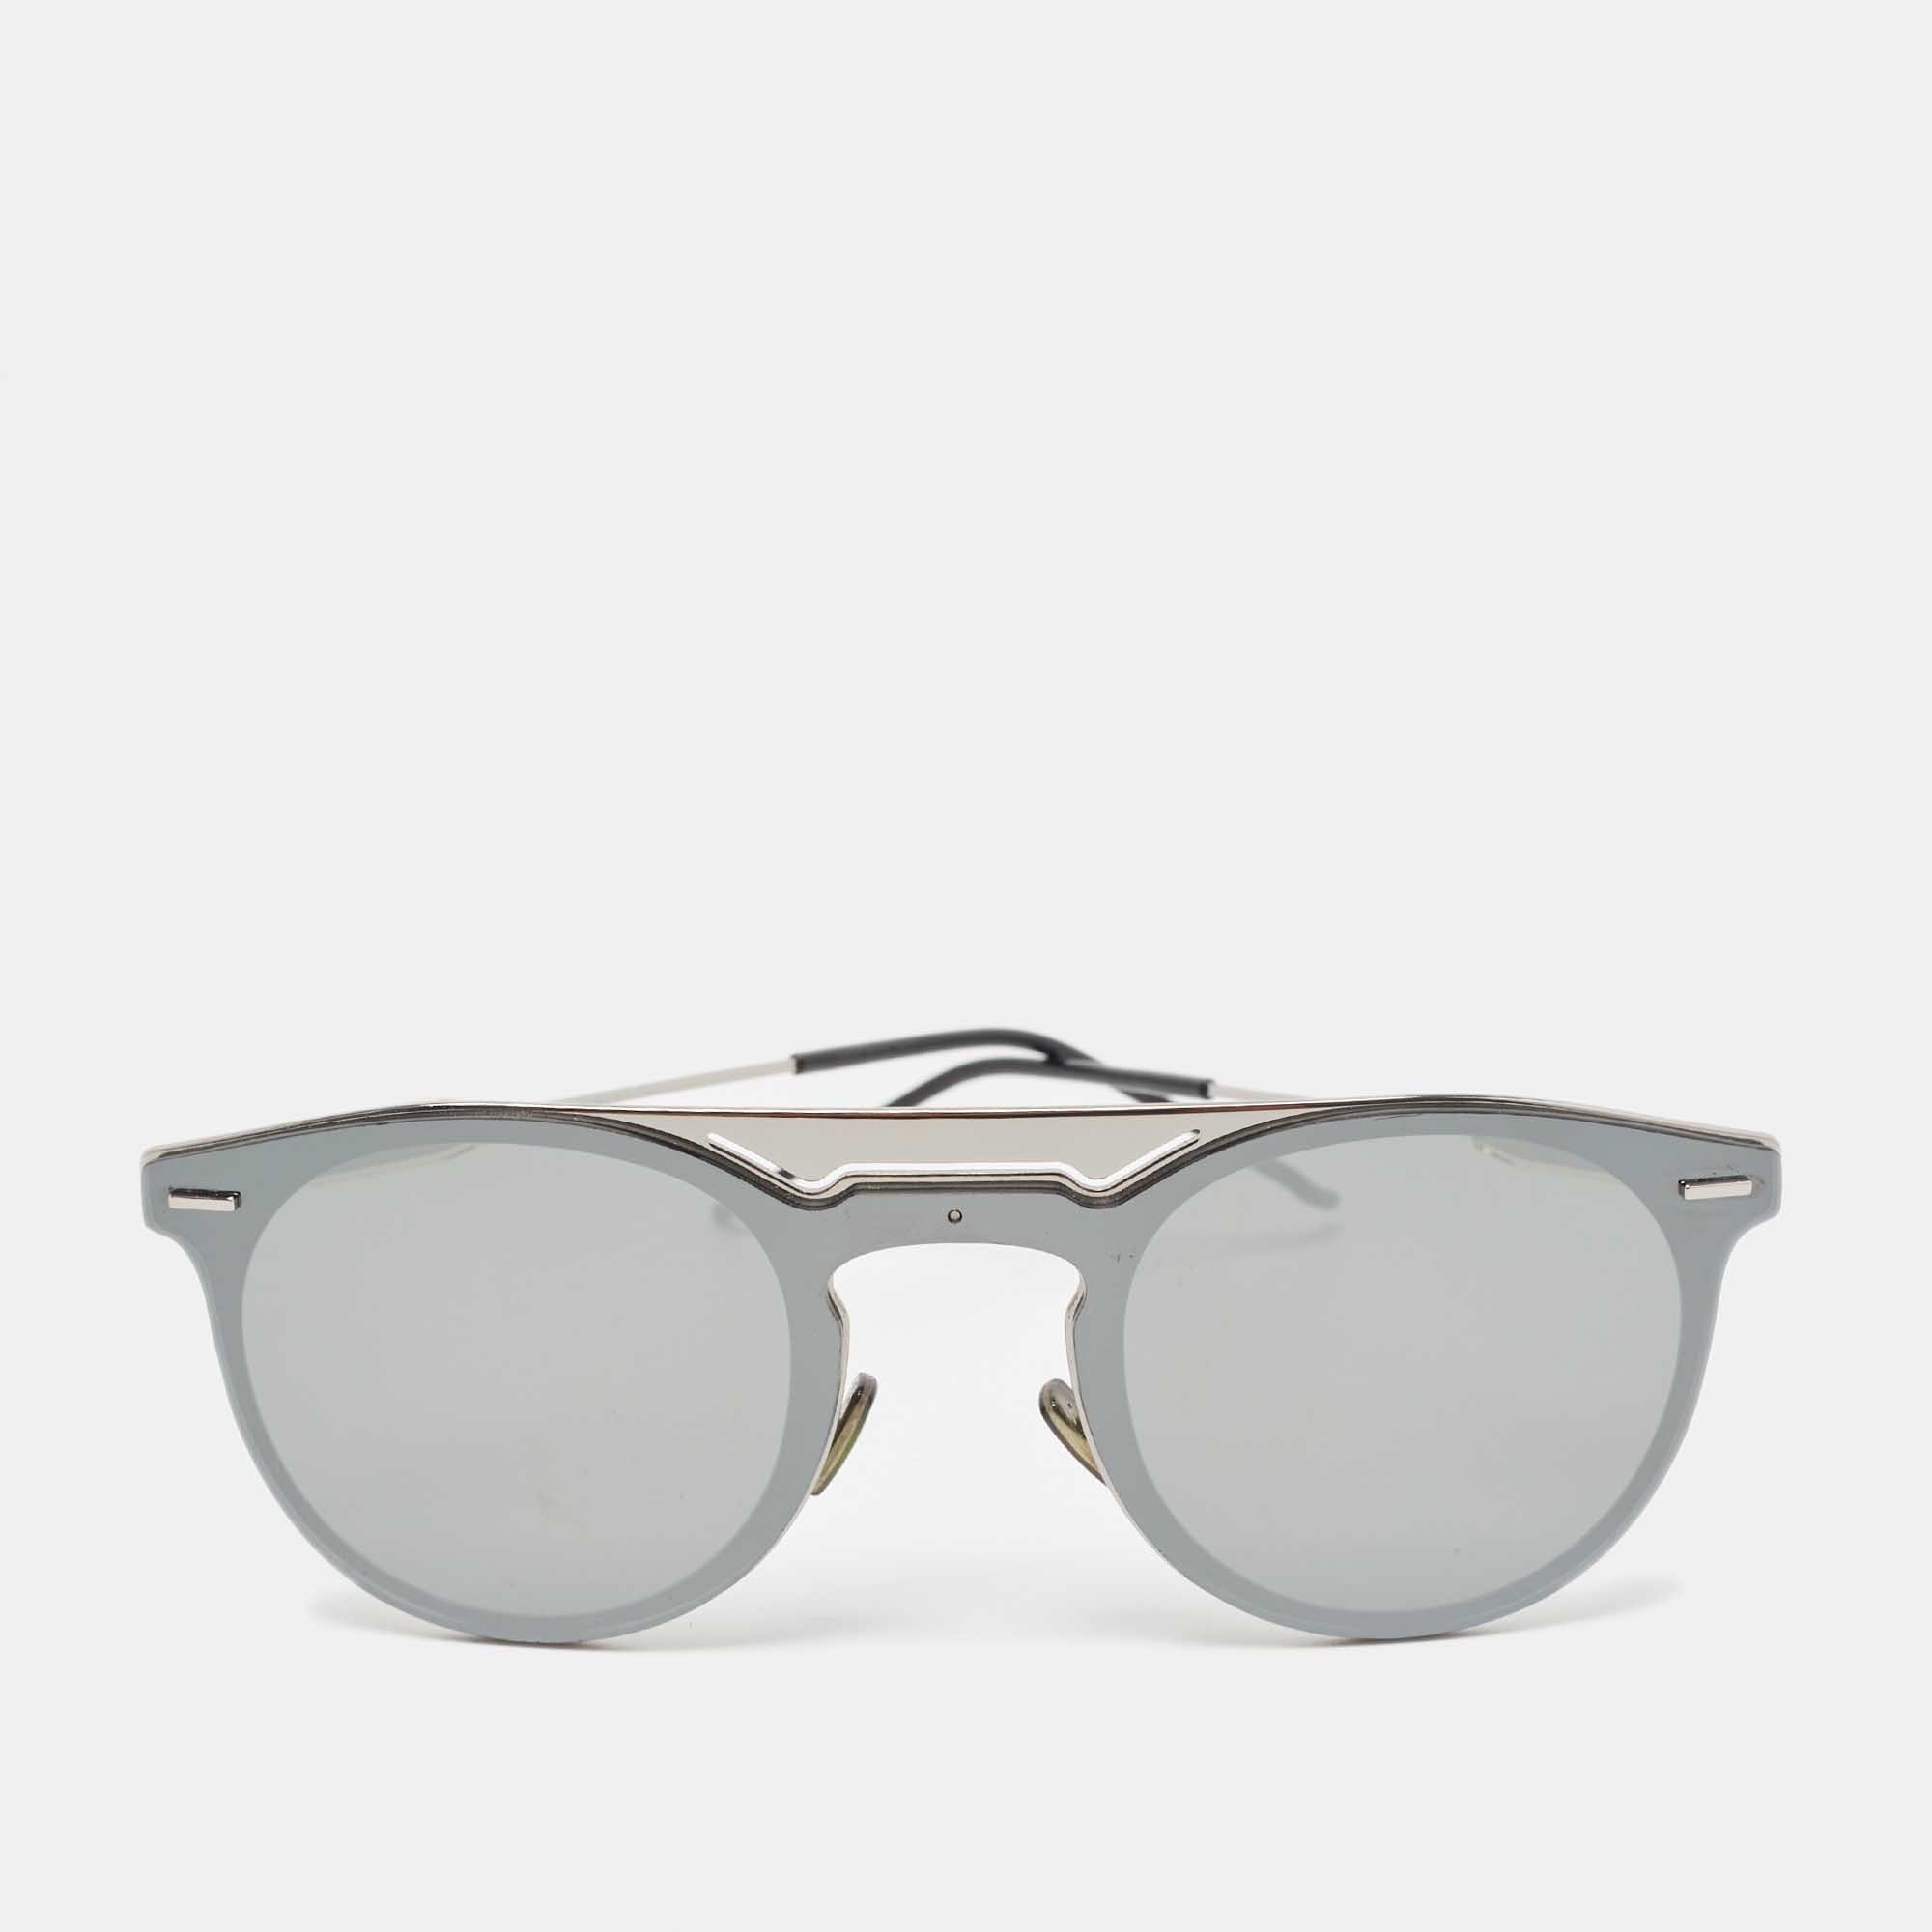 Dior homme grey mirrored 0211s round sunglasses